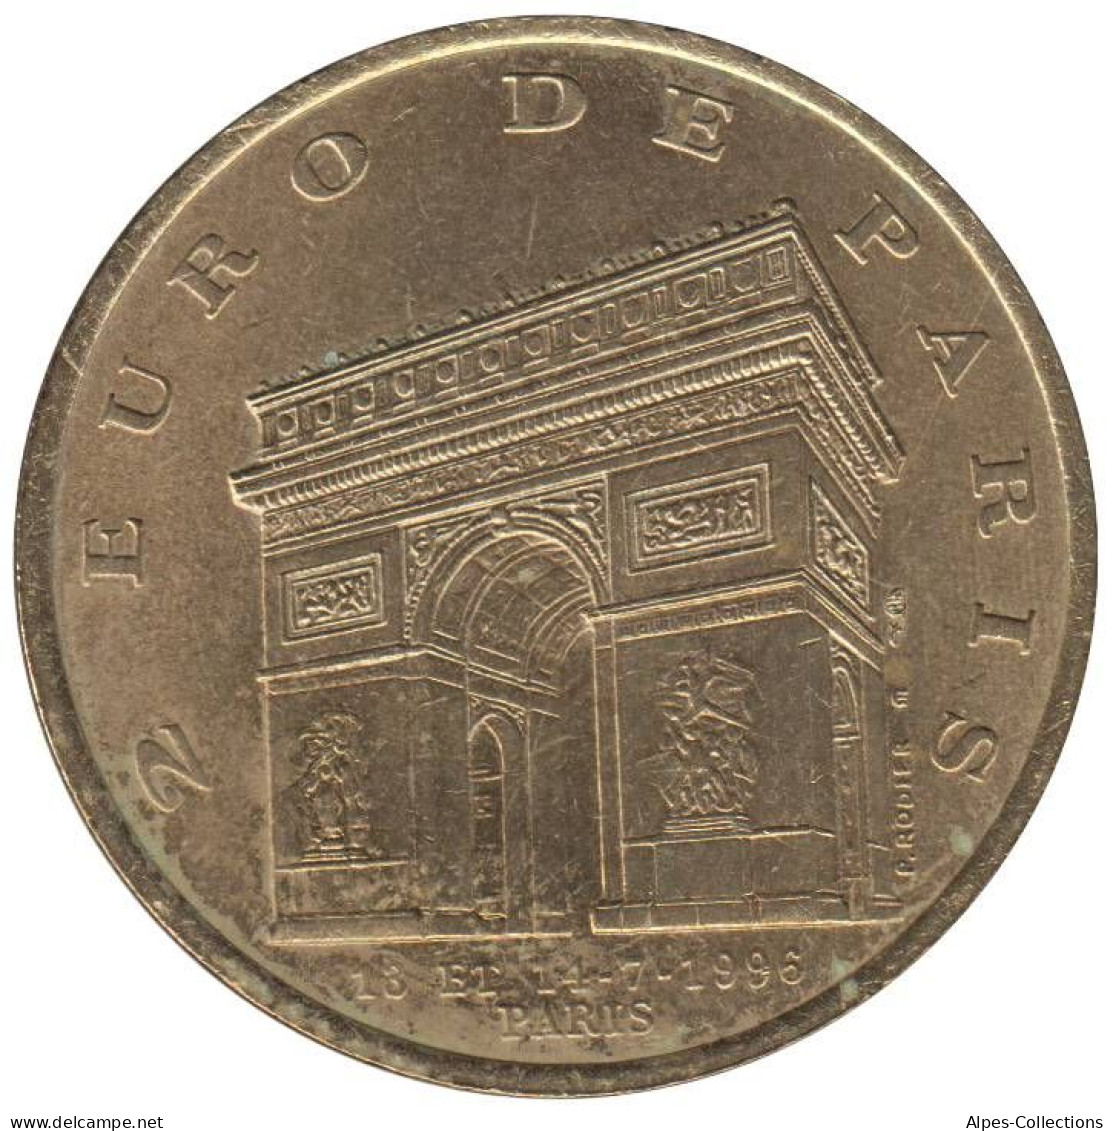 PARIS - EU0020.4 - 2 EURO DES VILLES - Réf: T194 - 1996 - Euros De Las Ciudades